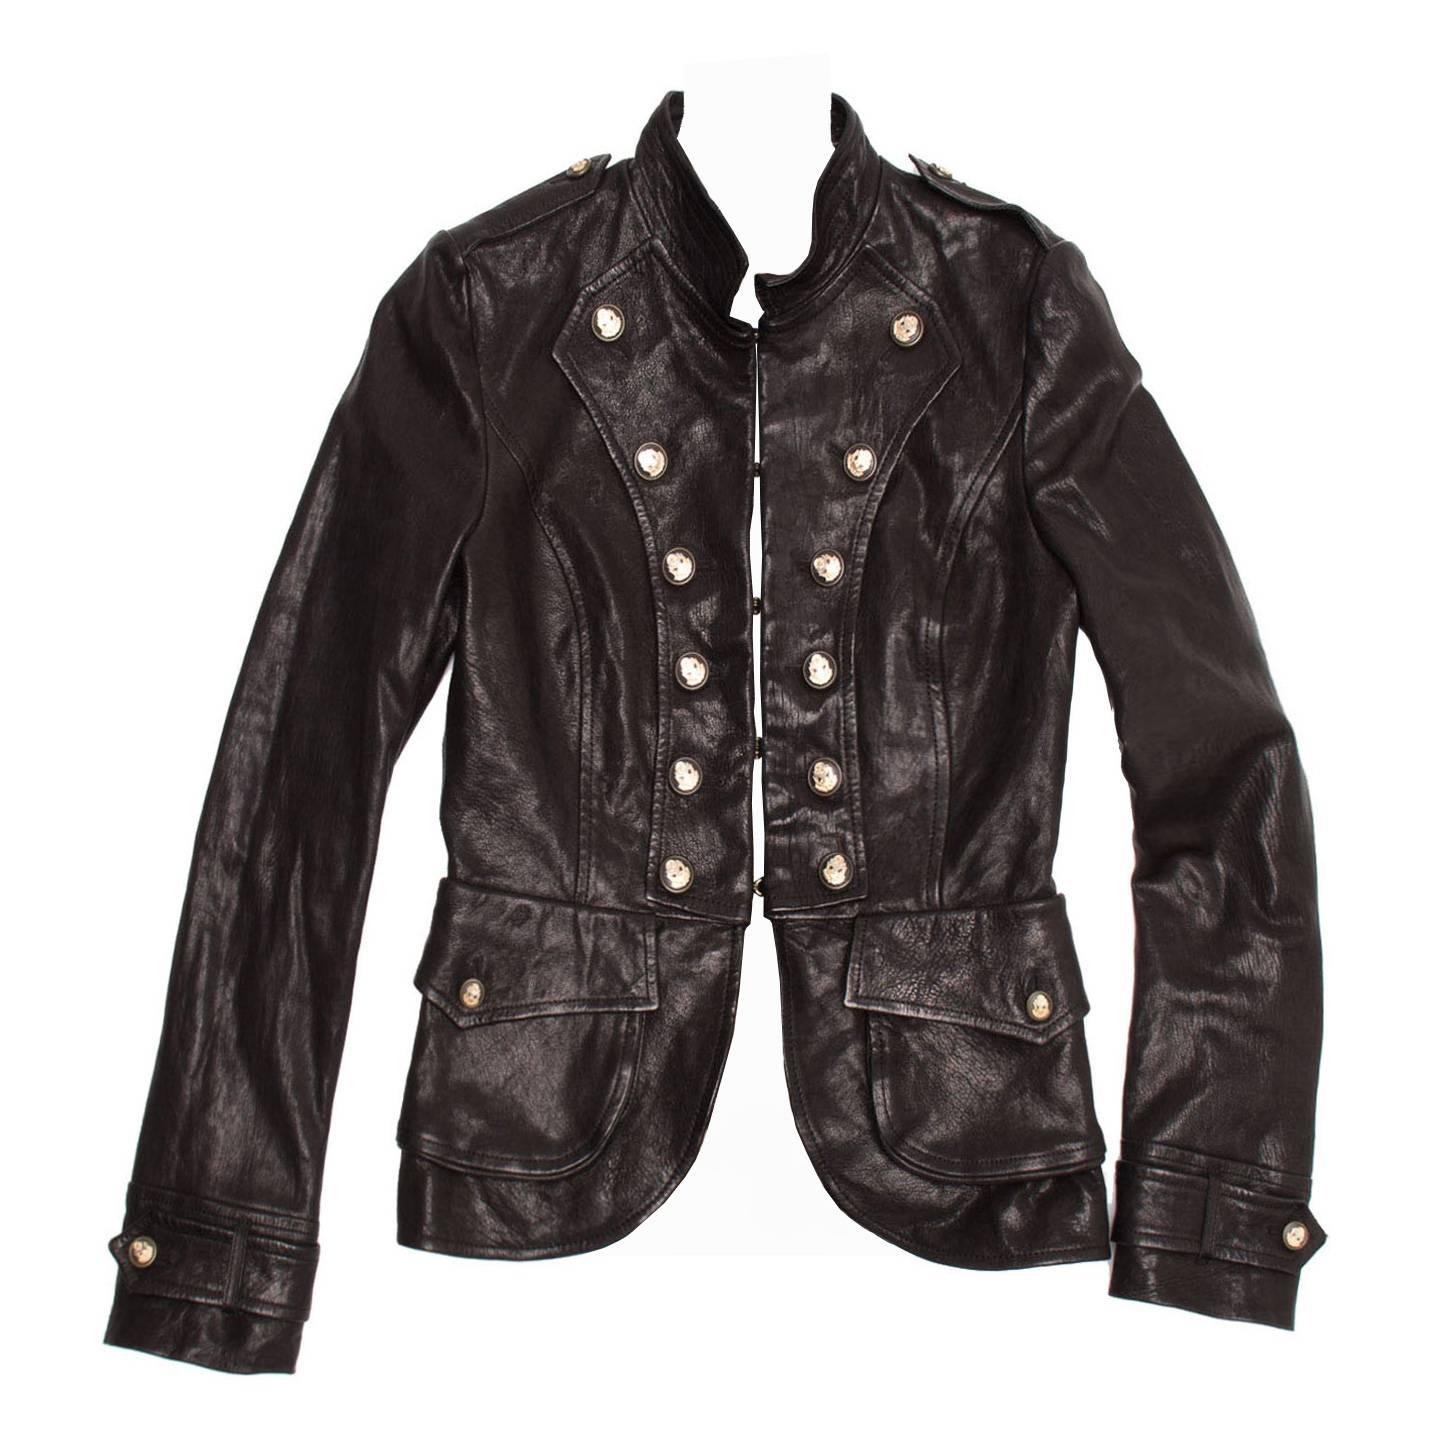 Dolce & Gabbana Black Distressed Leather Military Jacket